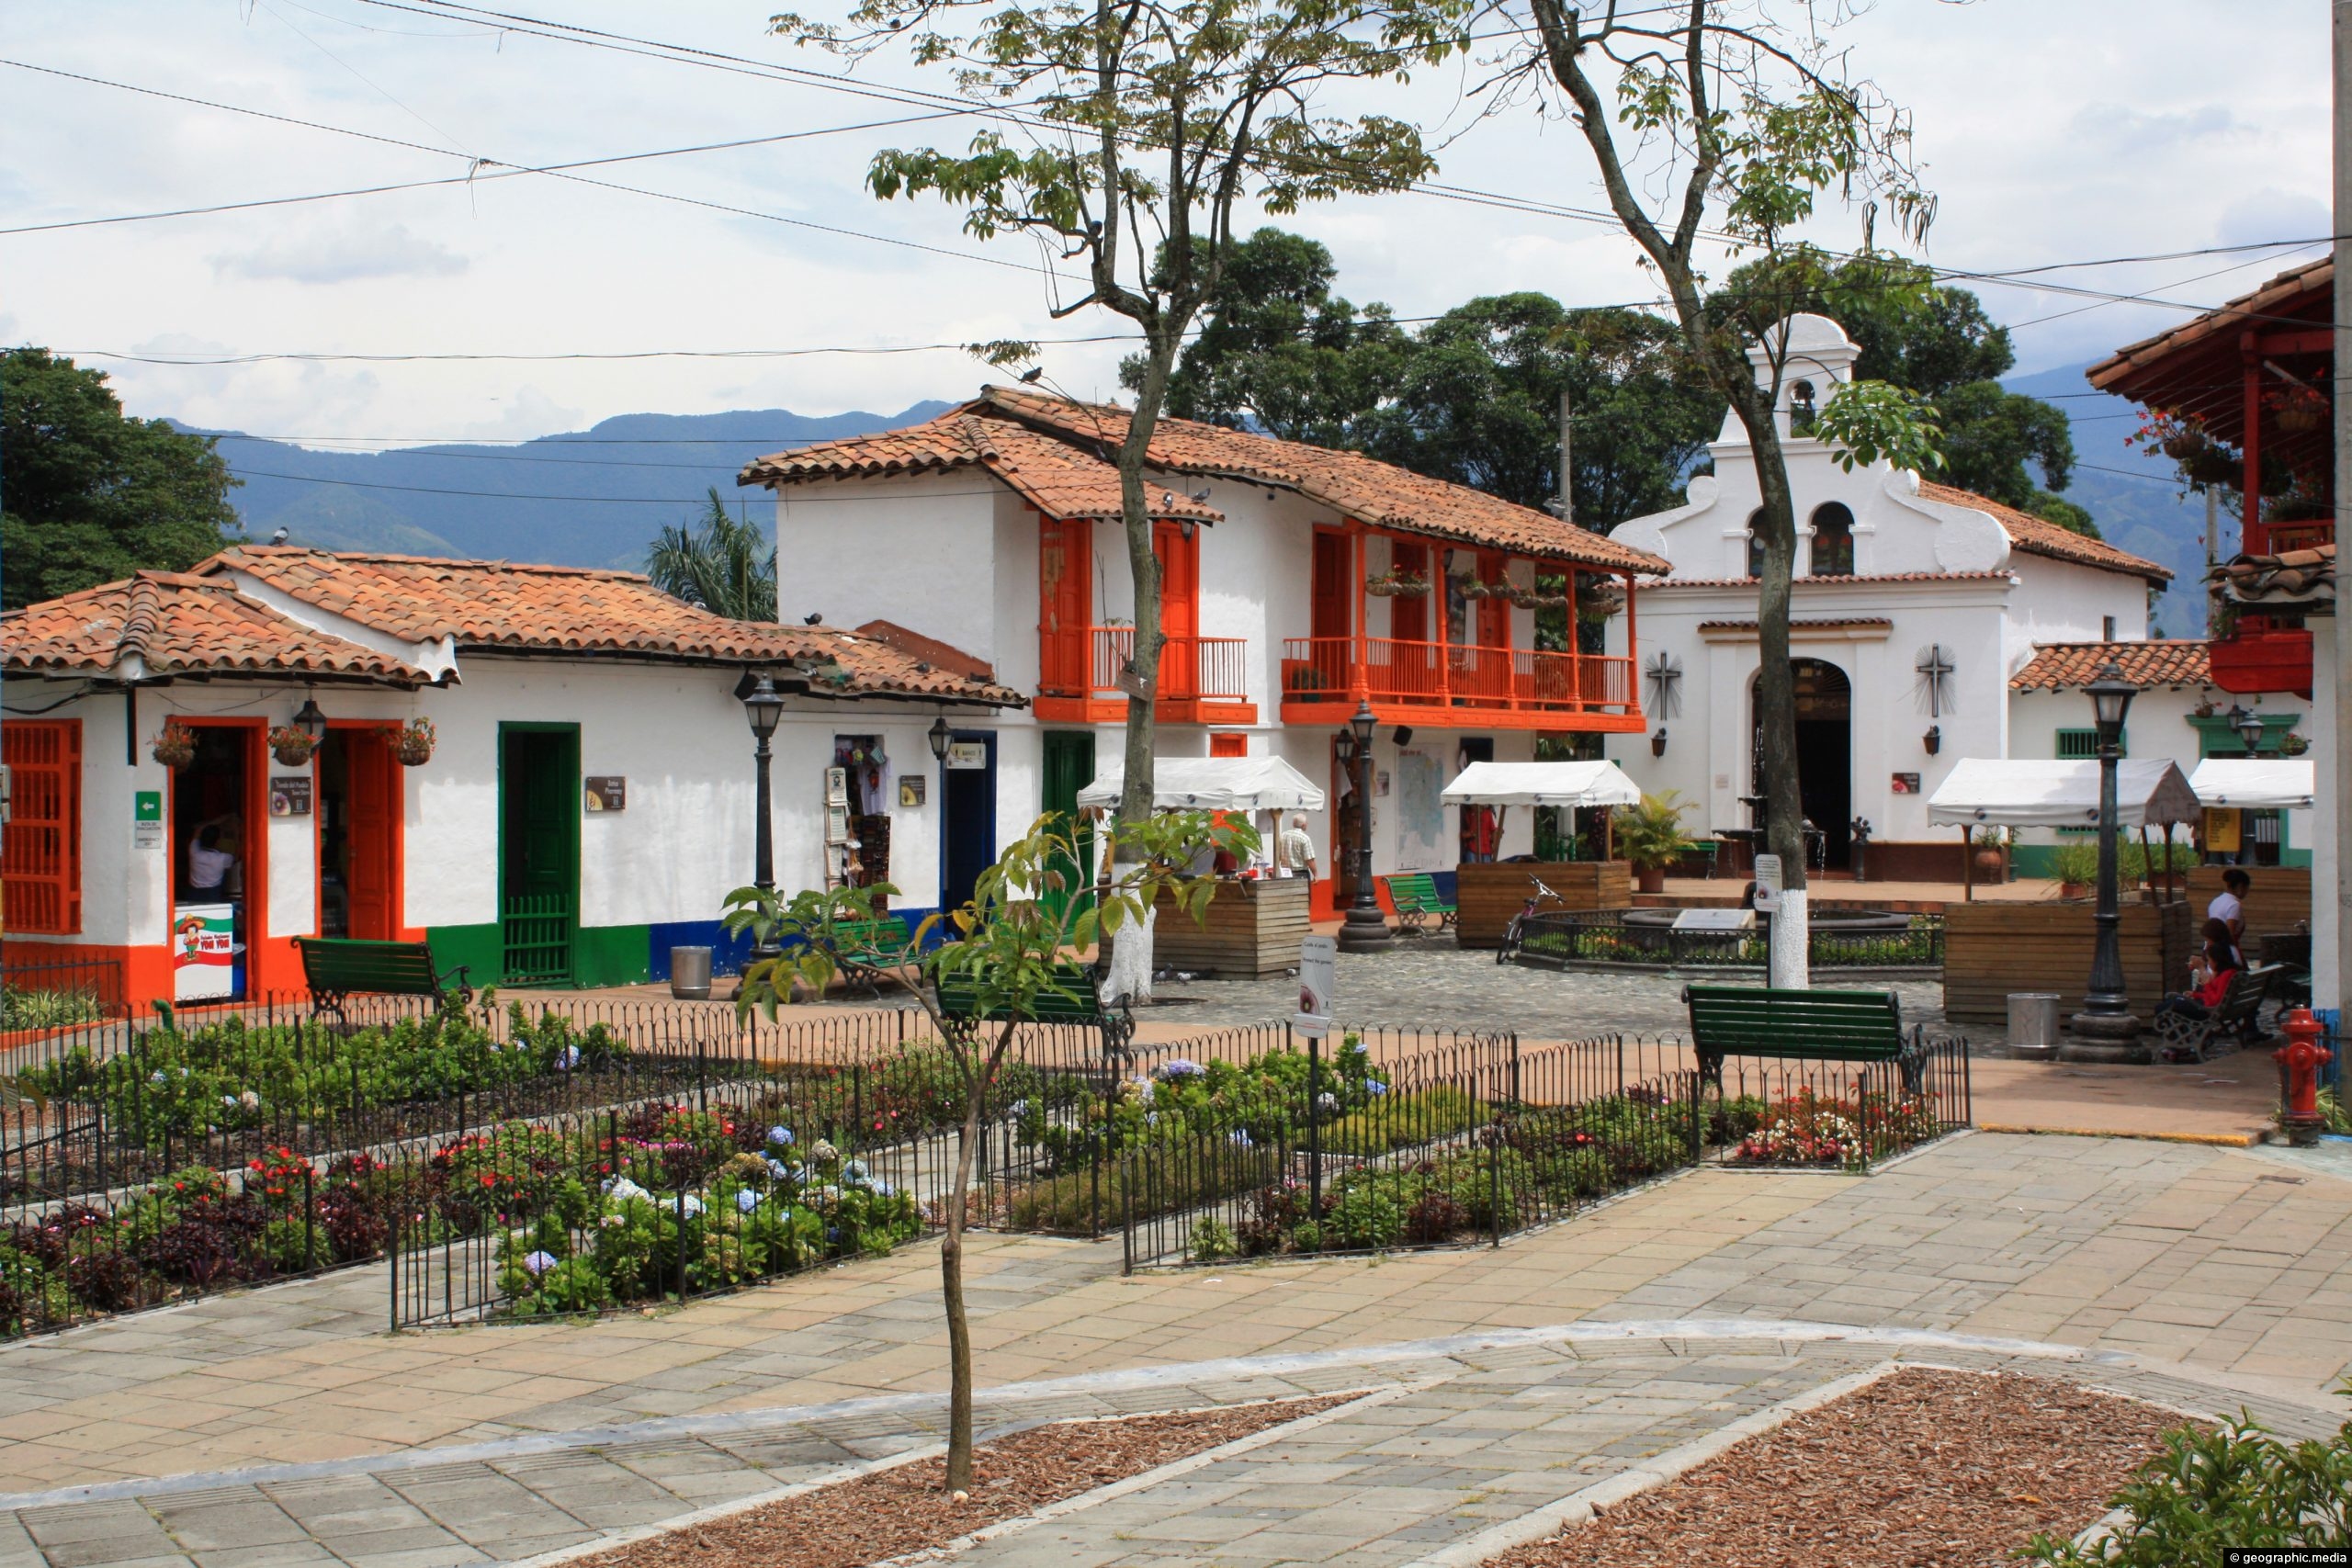 Pueblito Paisa Square Medellin